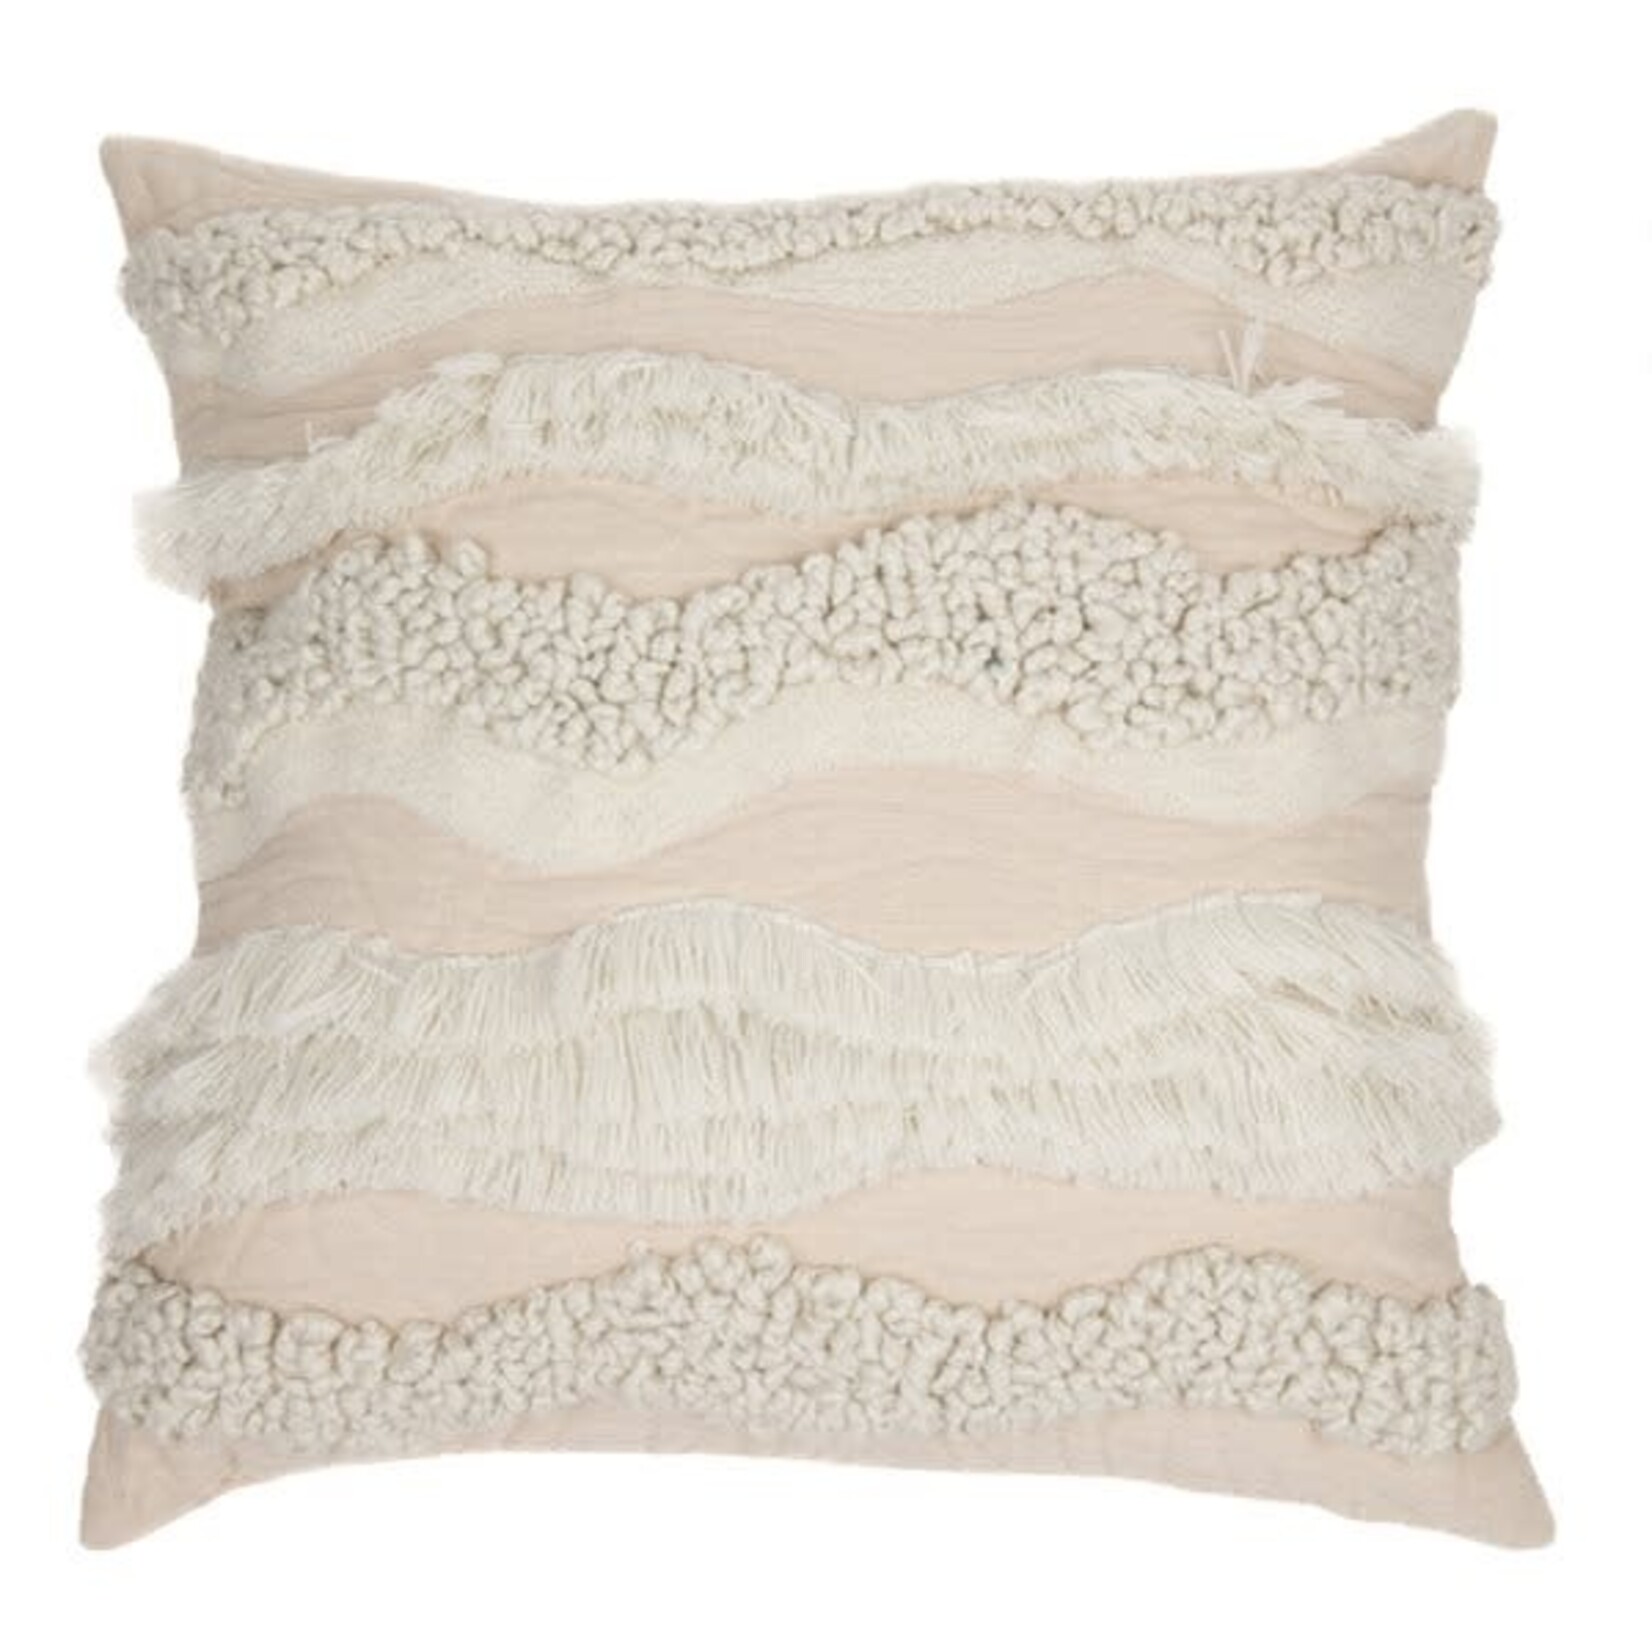 Brunelli Serenity Pillow